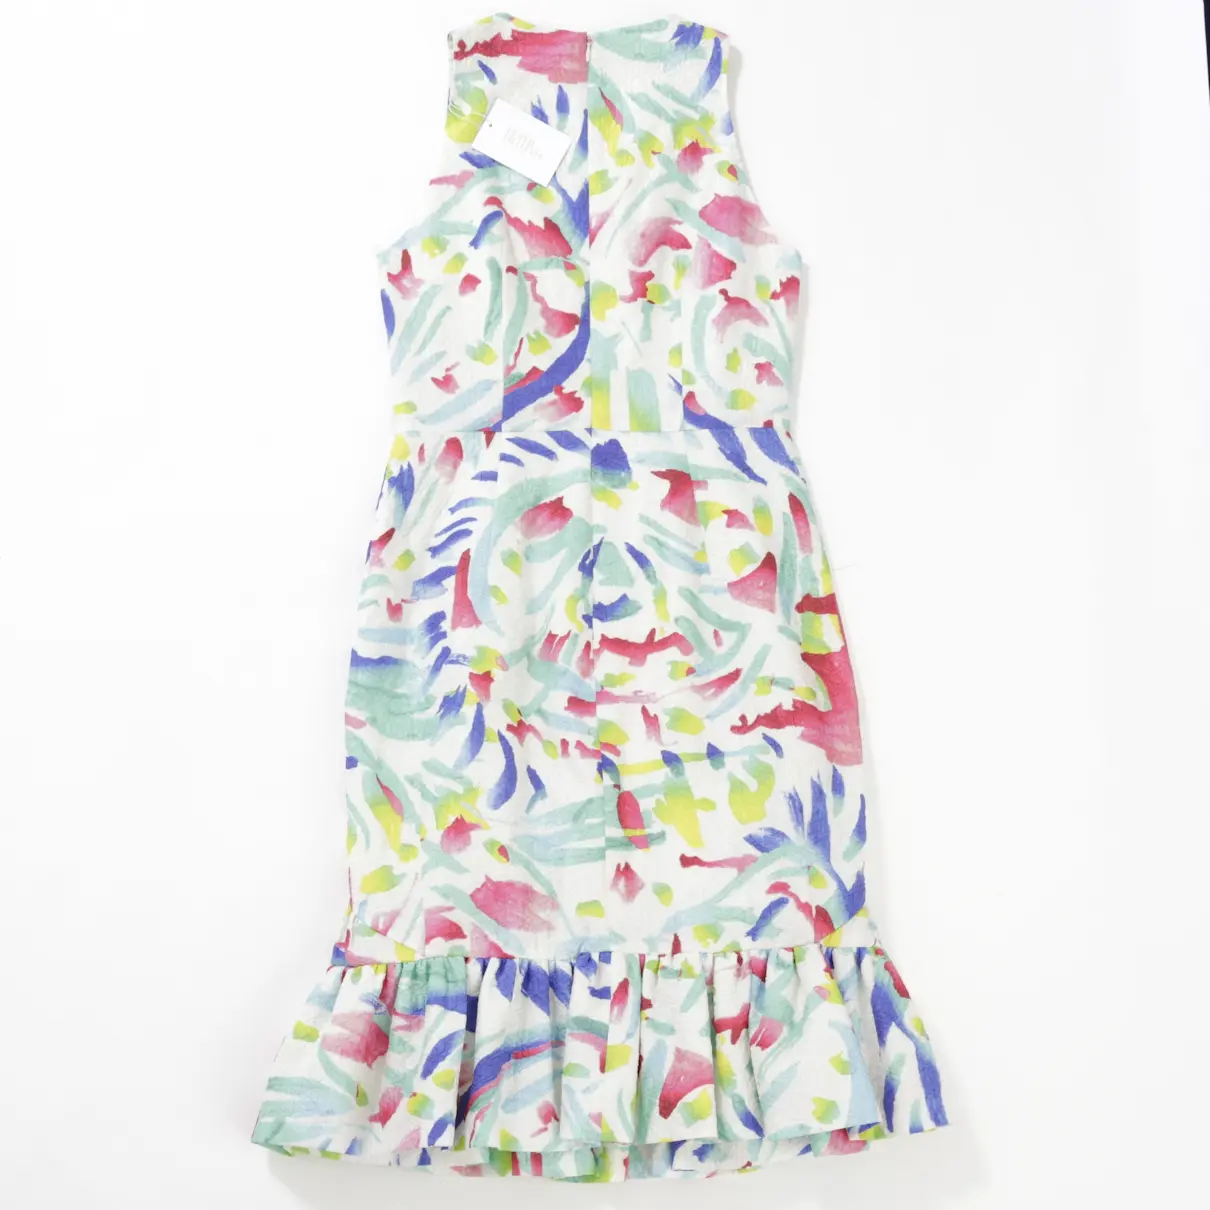 Peter Pilotto Silk dress for sale